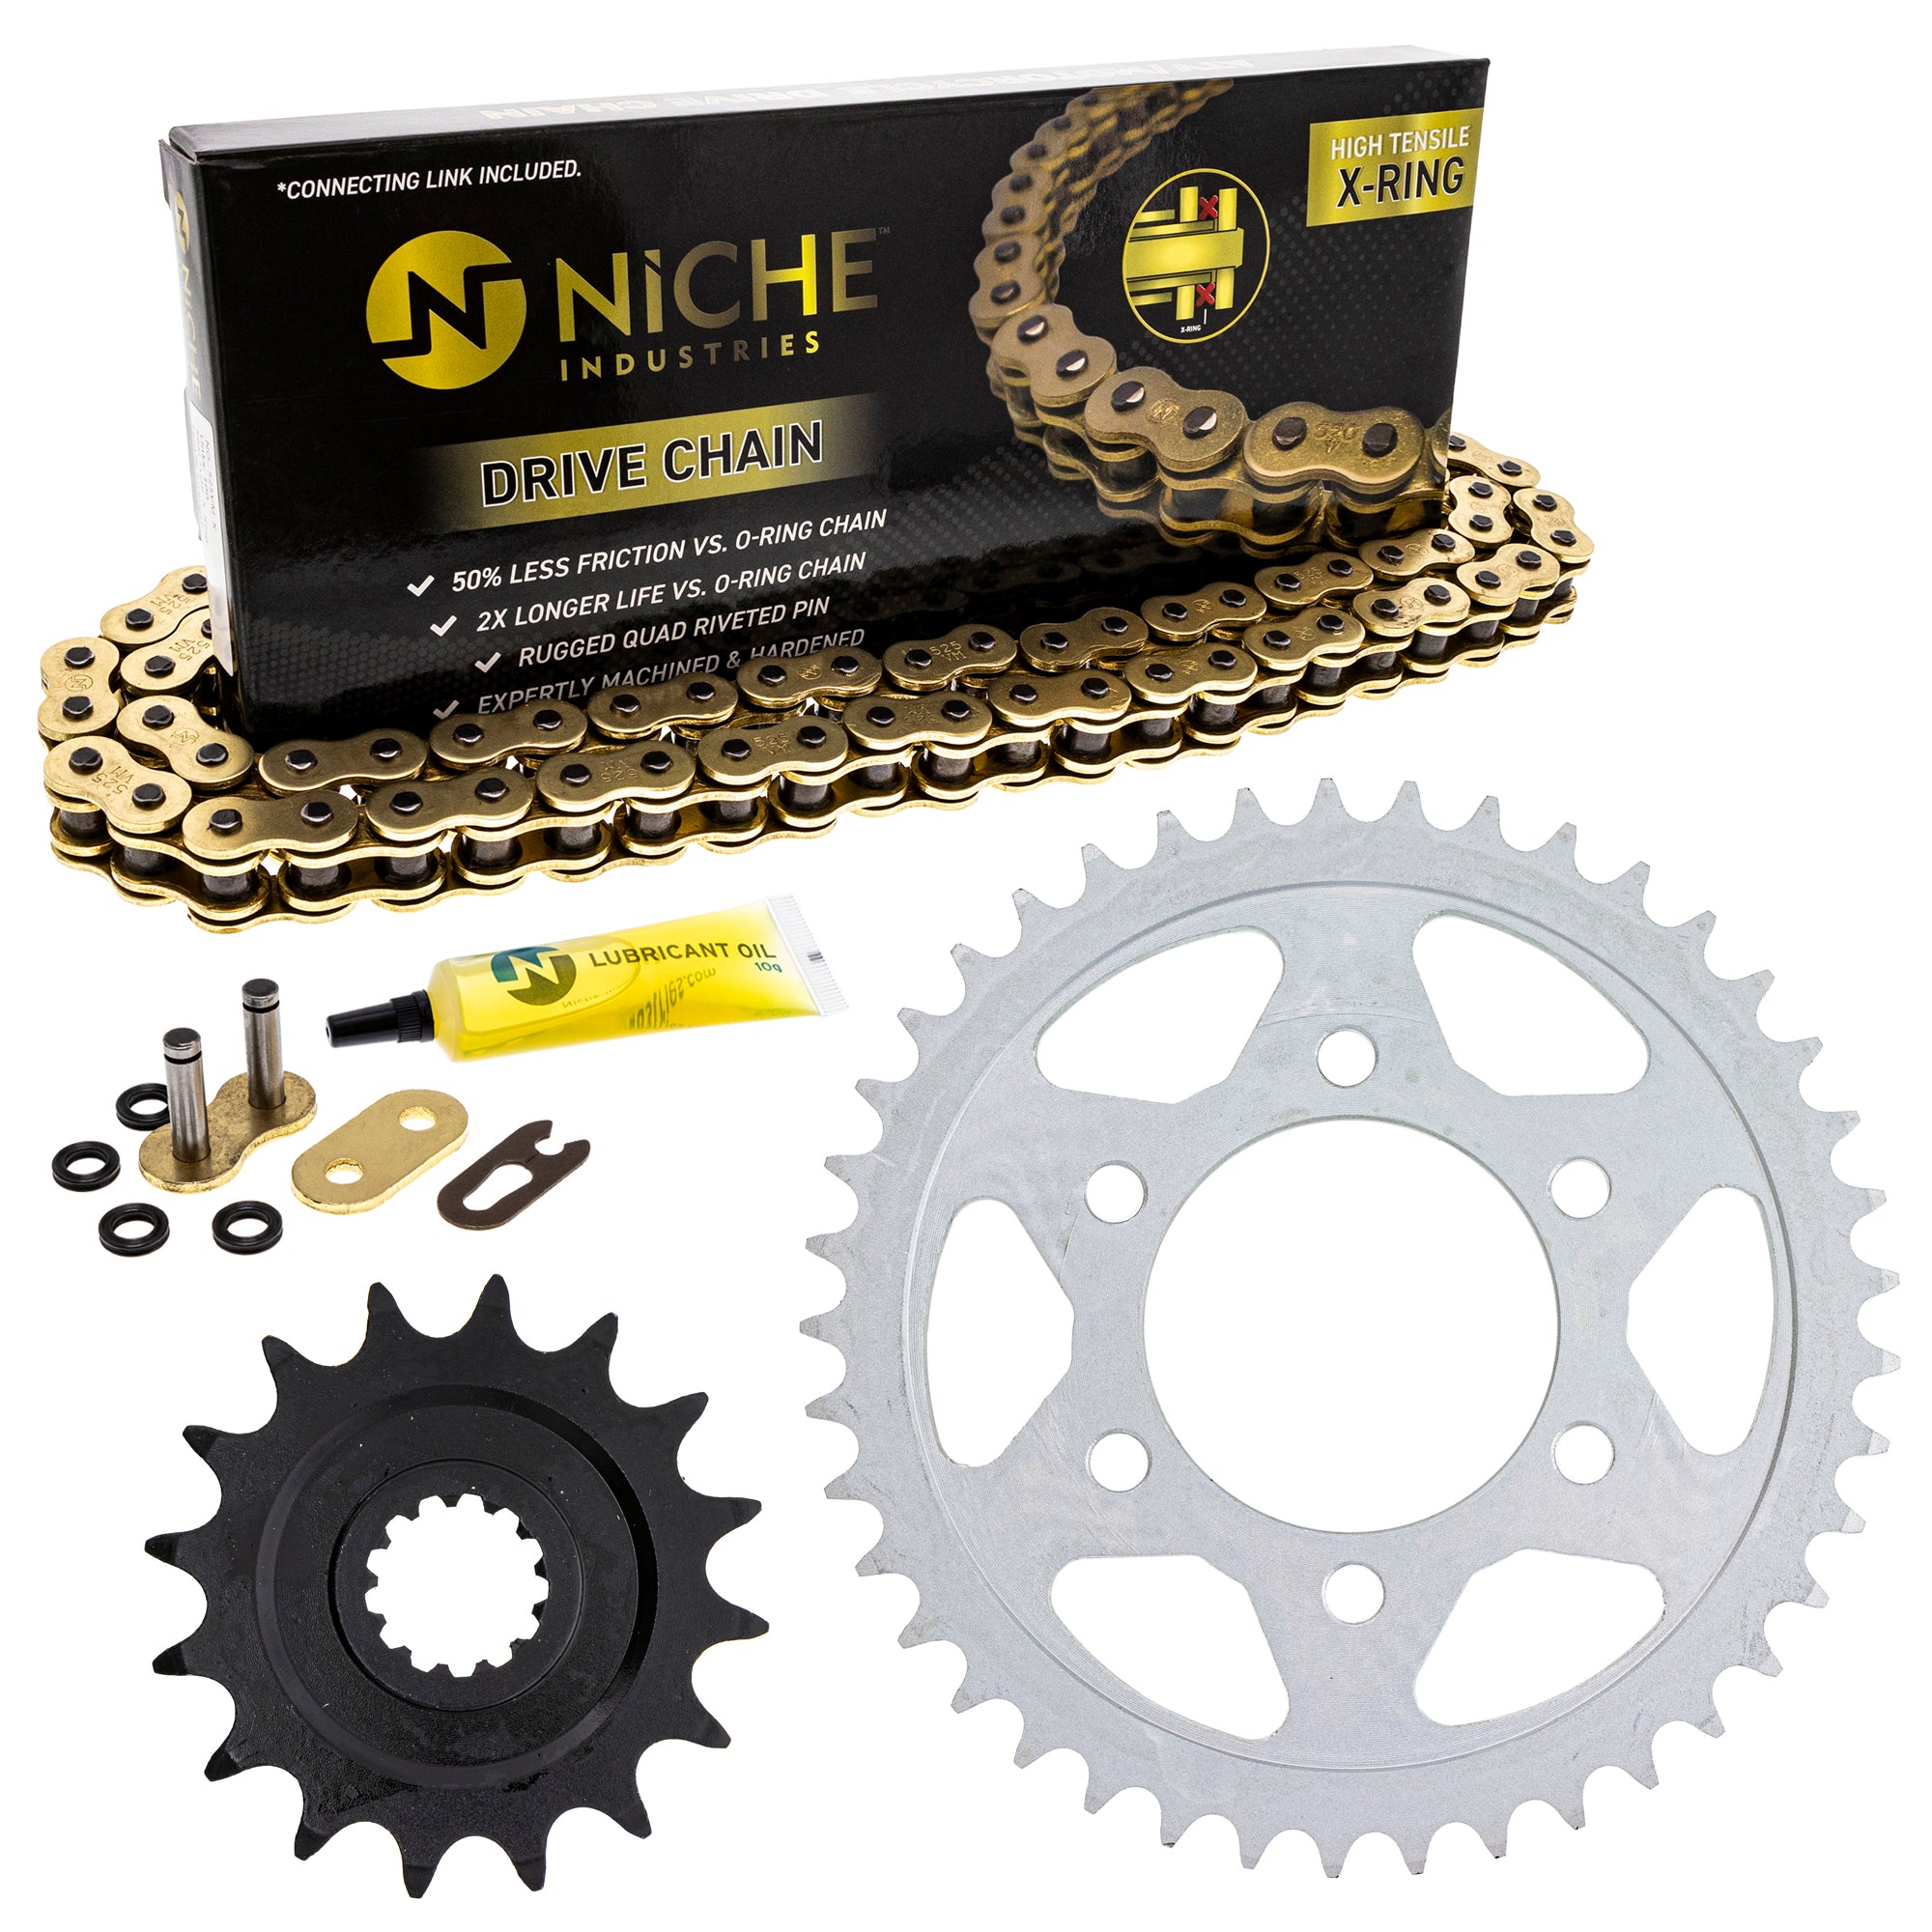 Drive Sprockets & Chain Kit for zOTHER Ninja 519-KCS1333K-K001 NICHE MK1004861